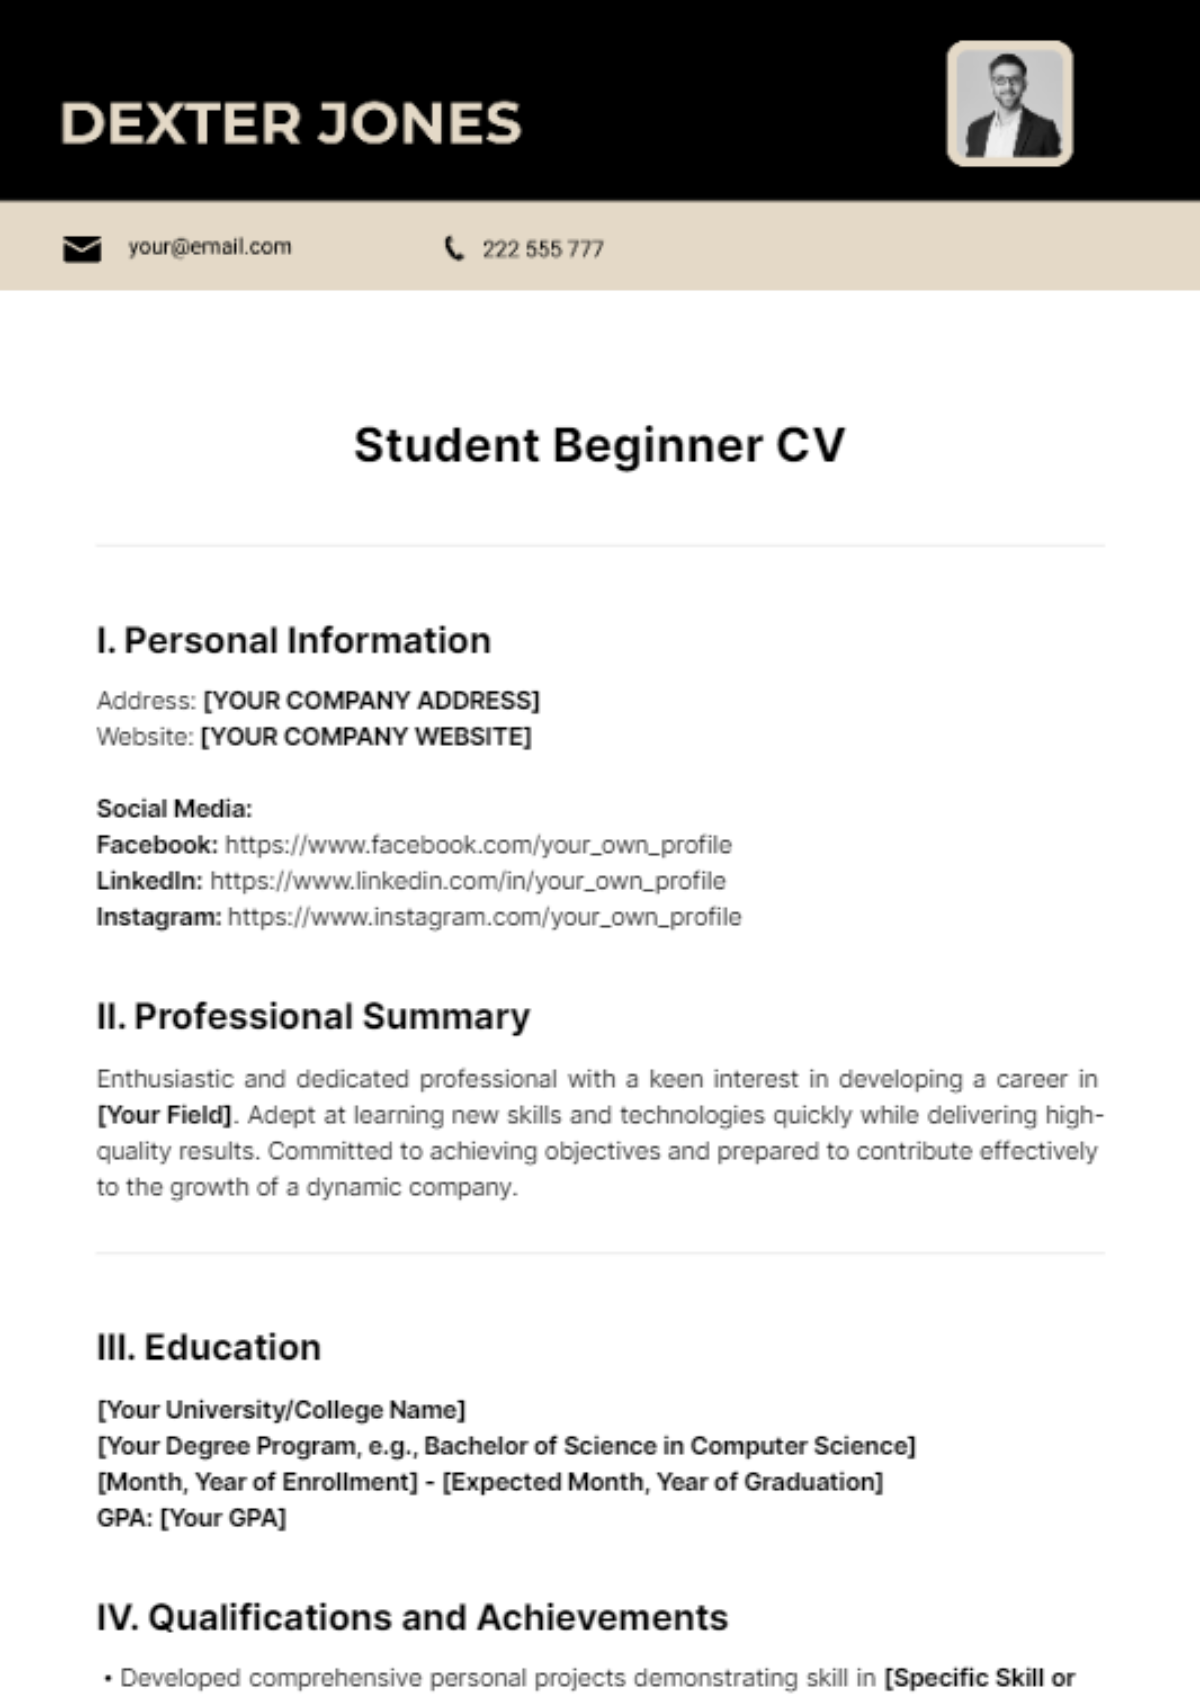 Student Beginner CV Template